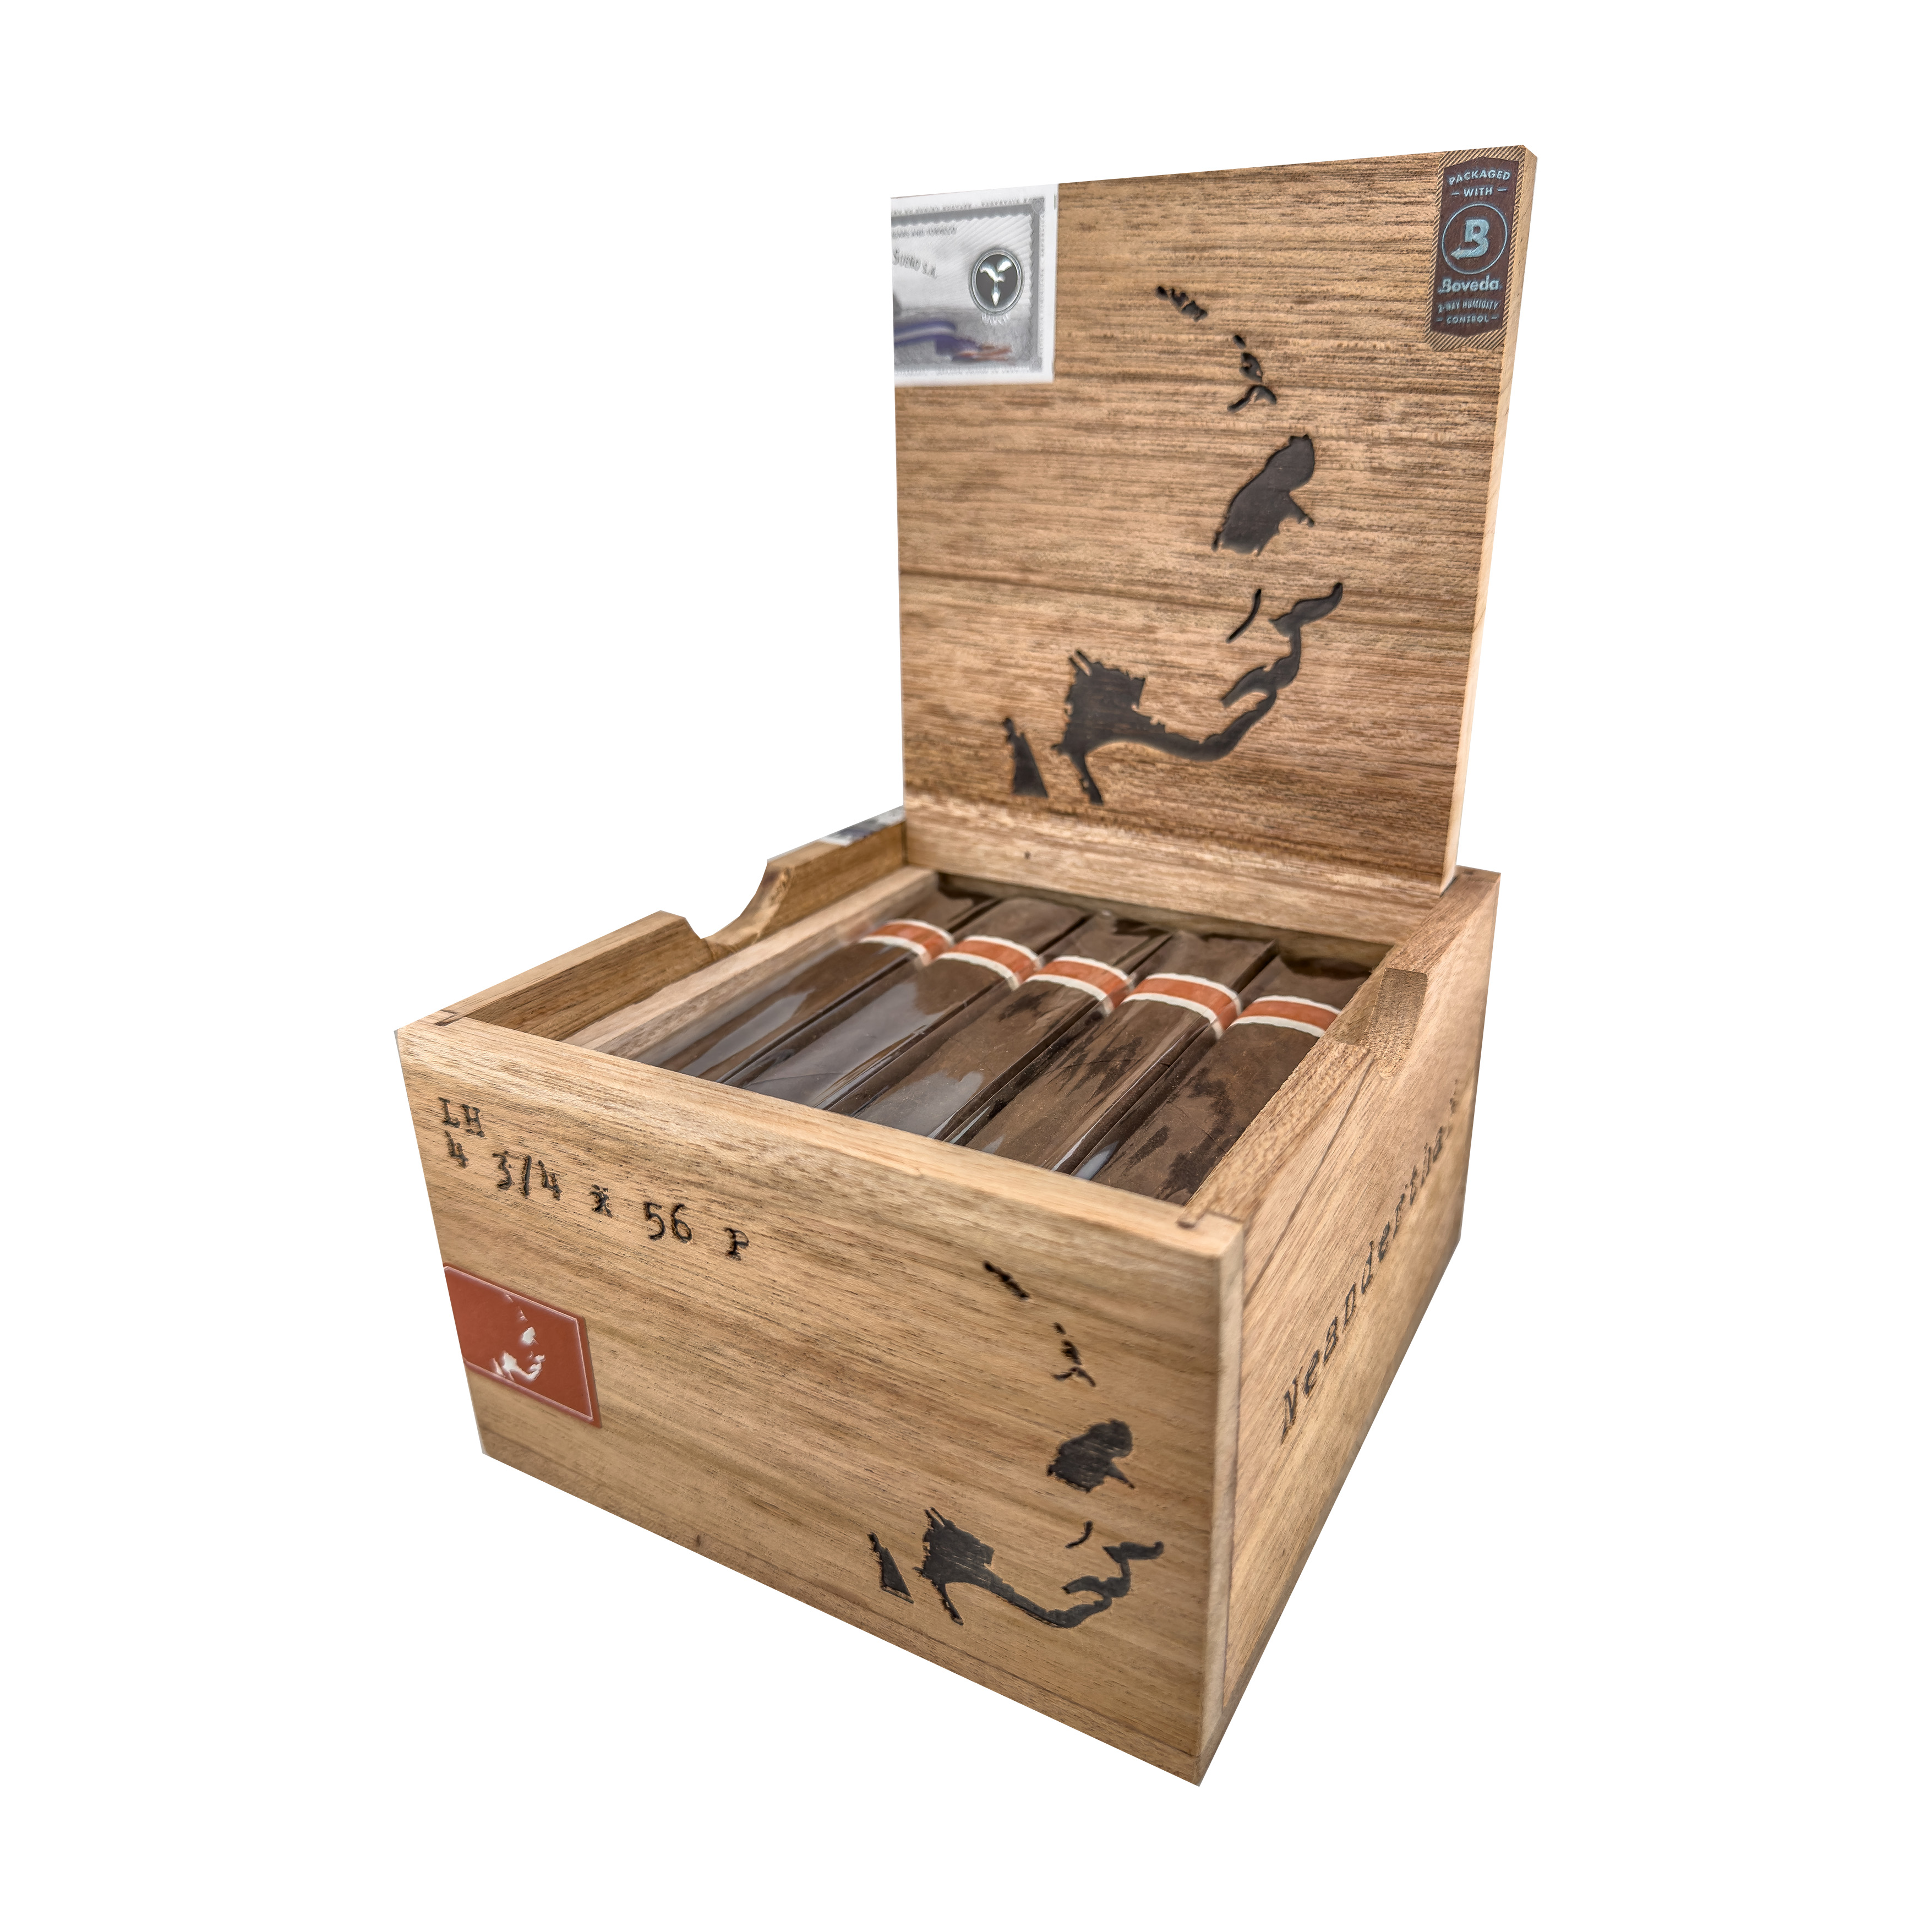 Neanderthal LH Box Press Cigar - Box